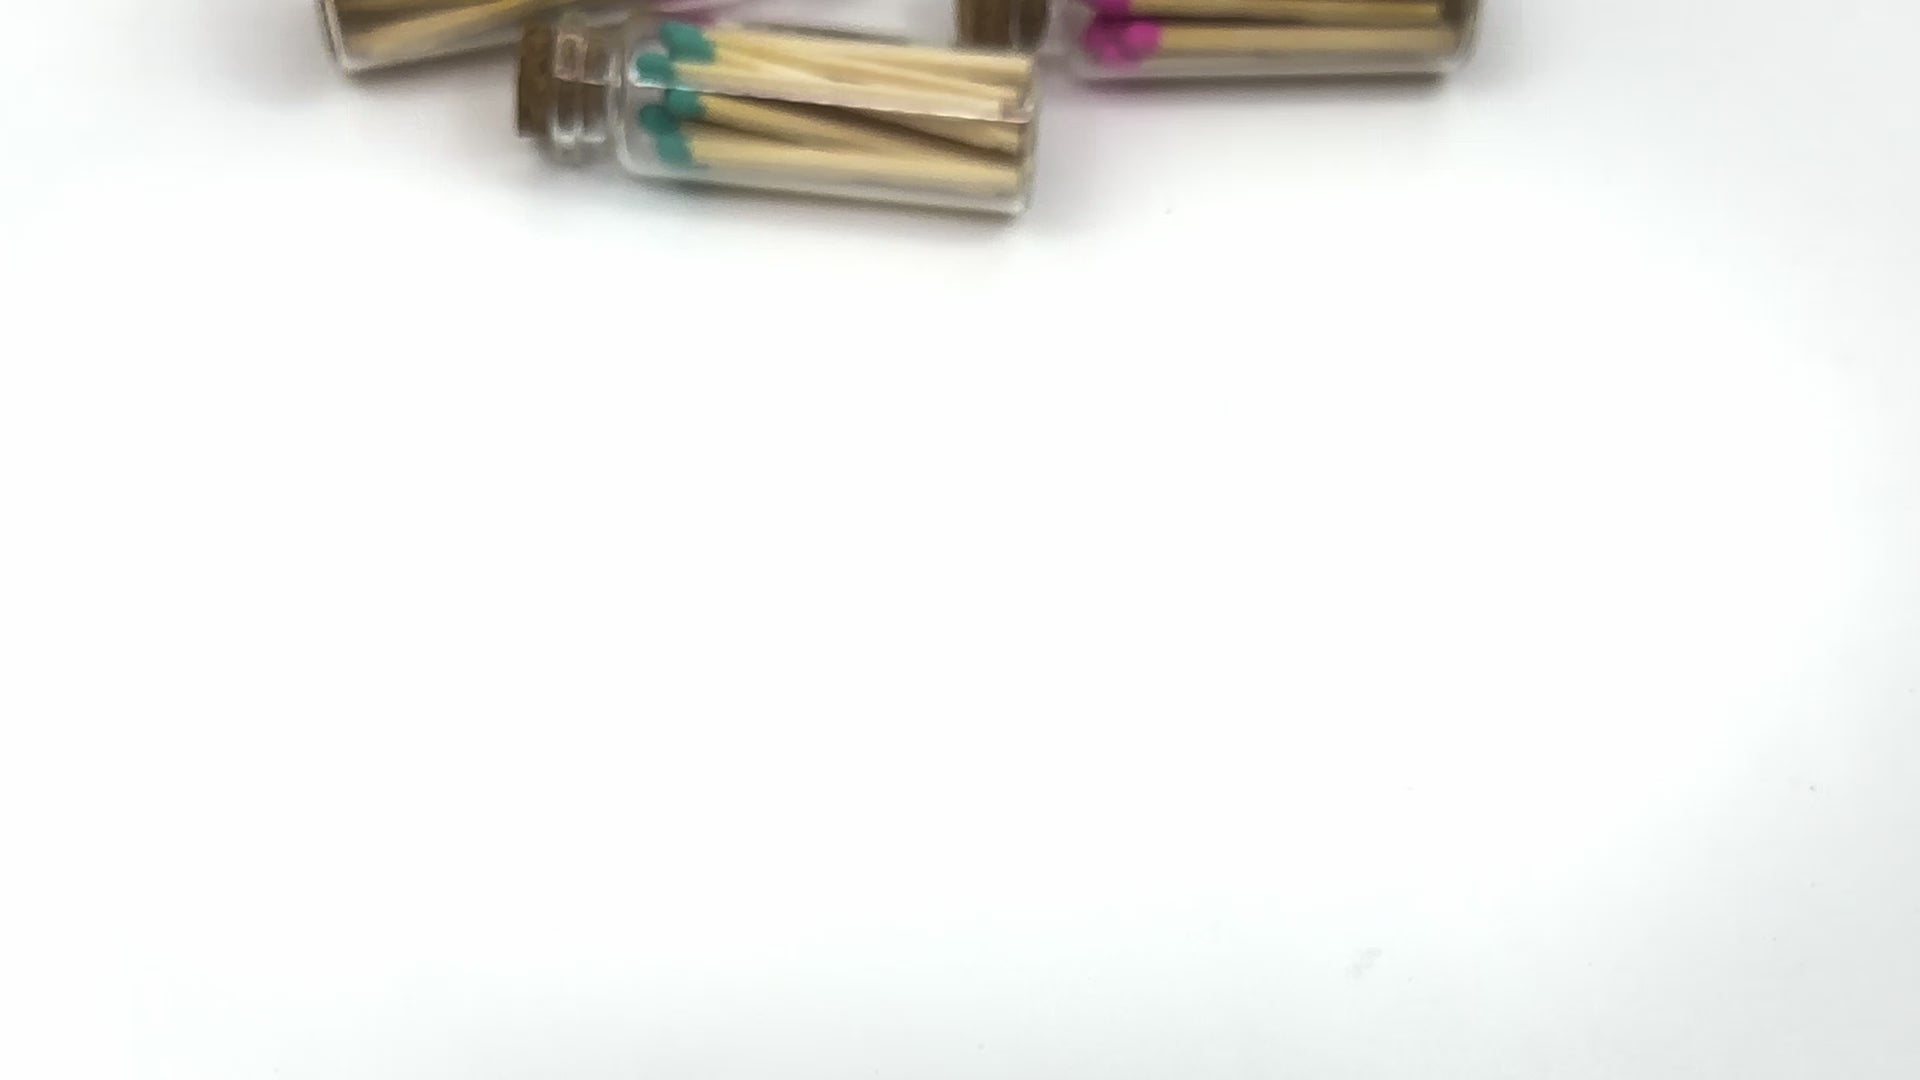 Set of 40 Artisan Matchsticks 2 Colored Safety Matches 